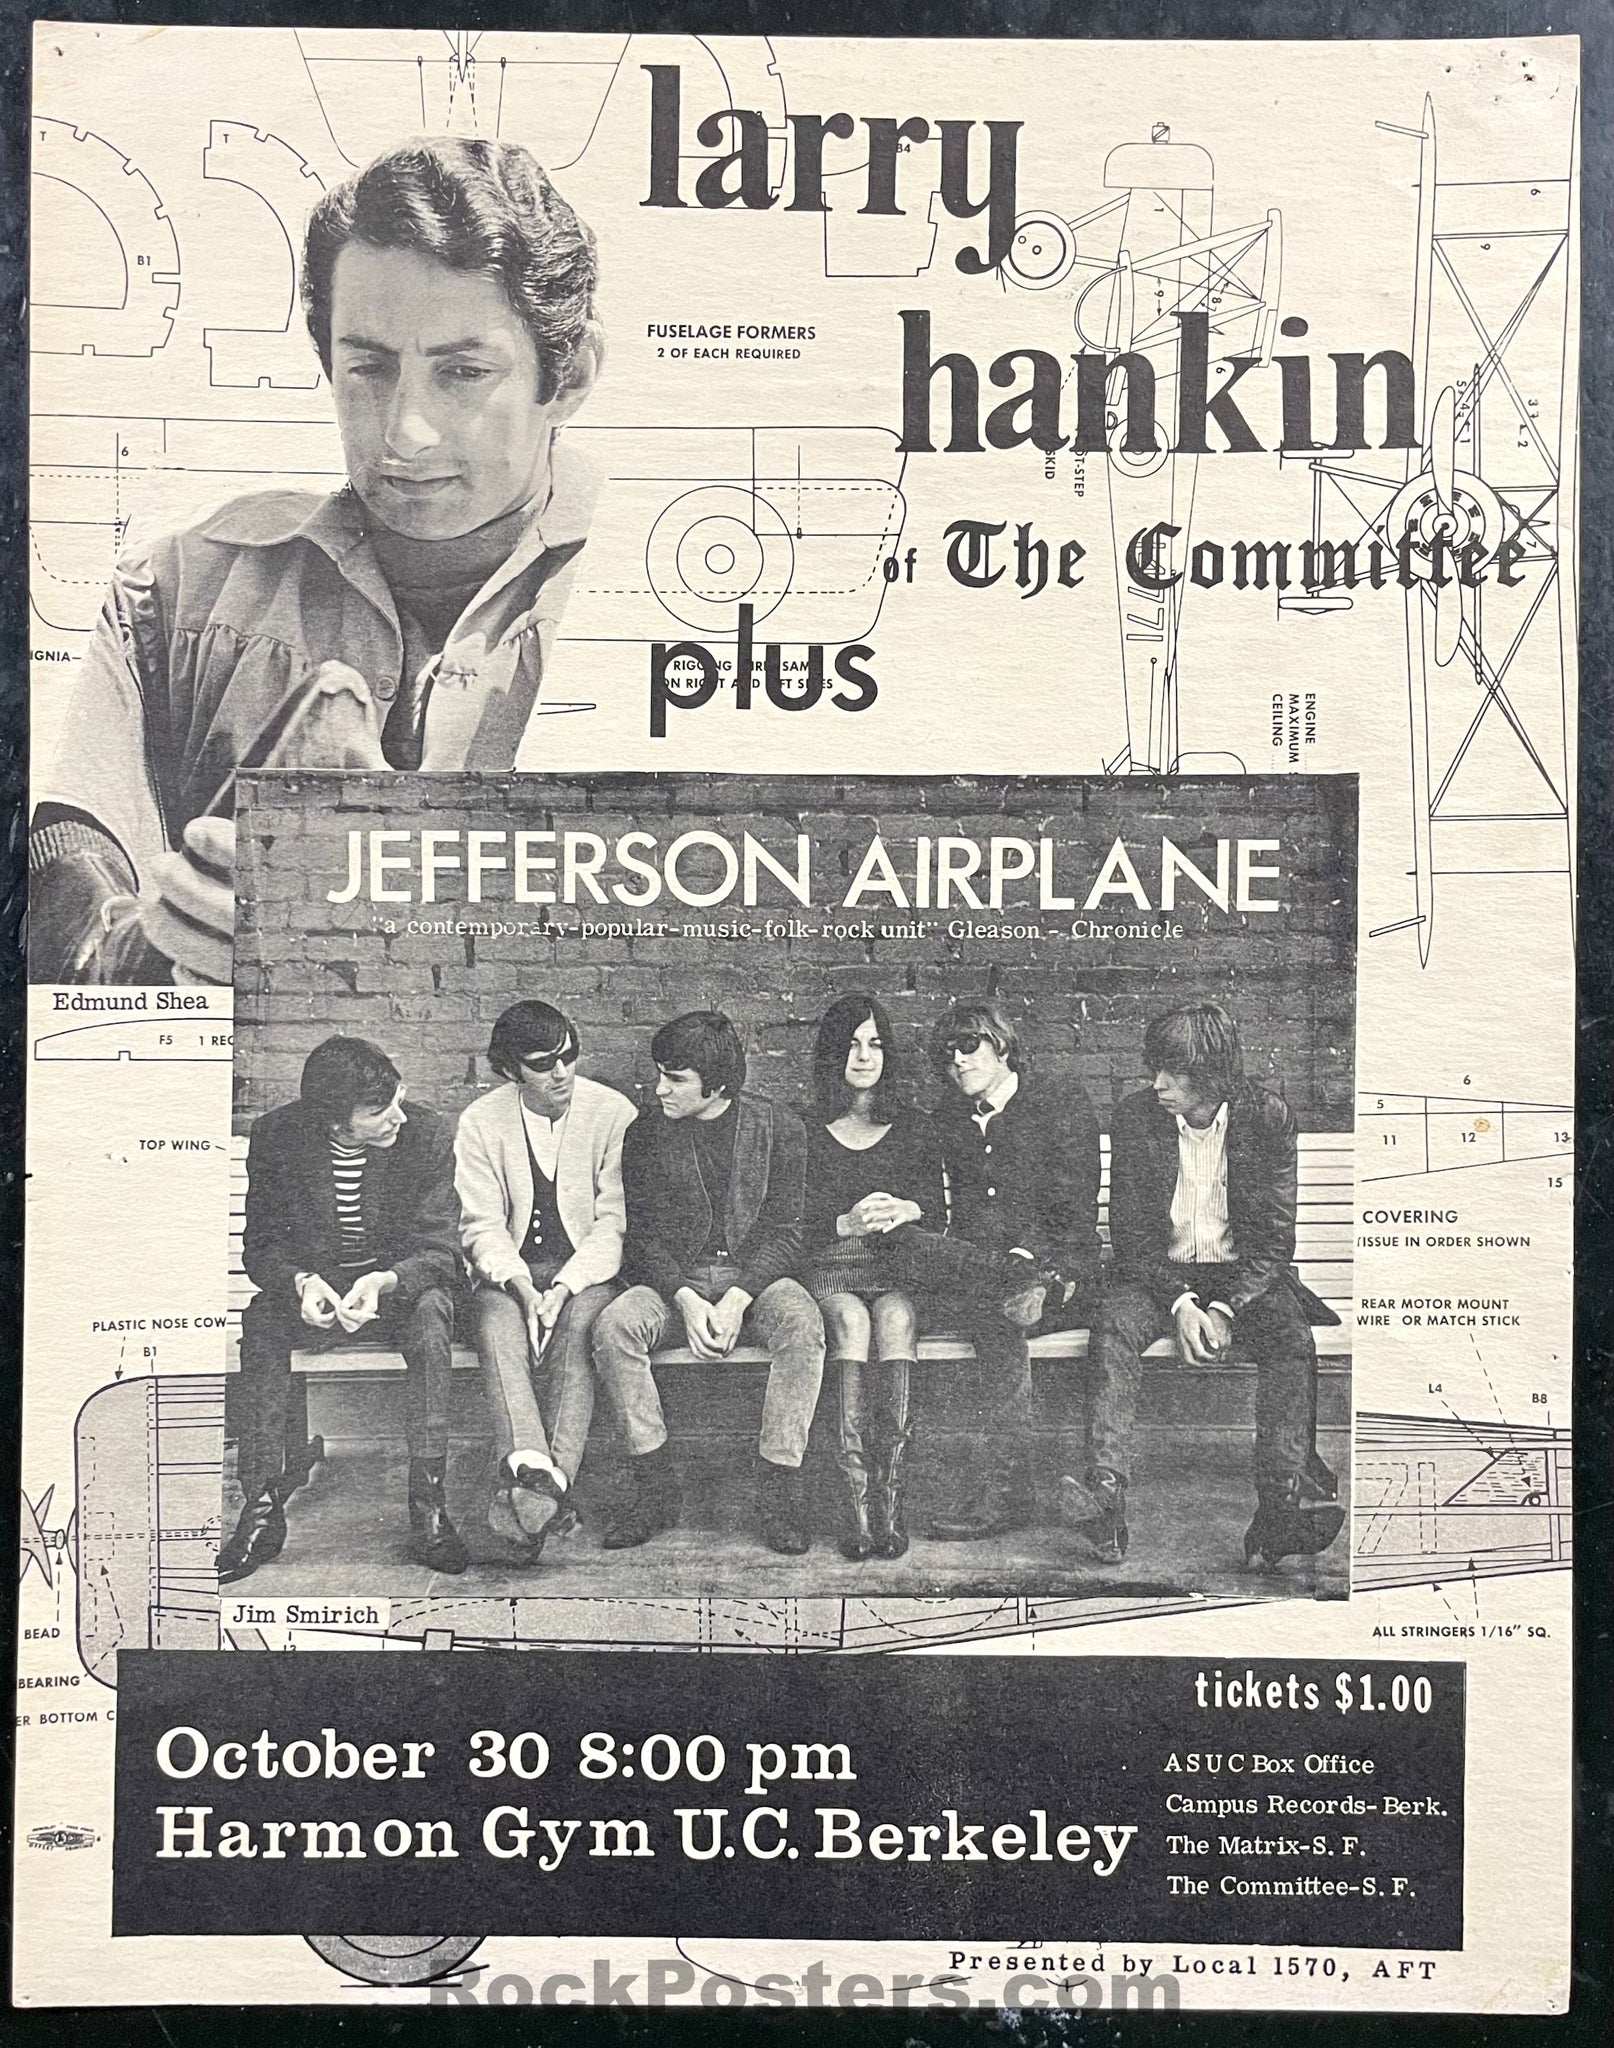 AUCTION - AOR 2.135 - Jefferson Airplane - Harmon Gym Berkeley -  1965 Poster - Excellent